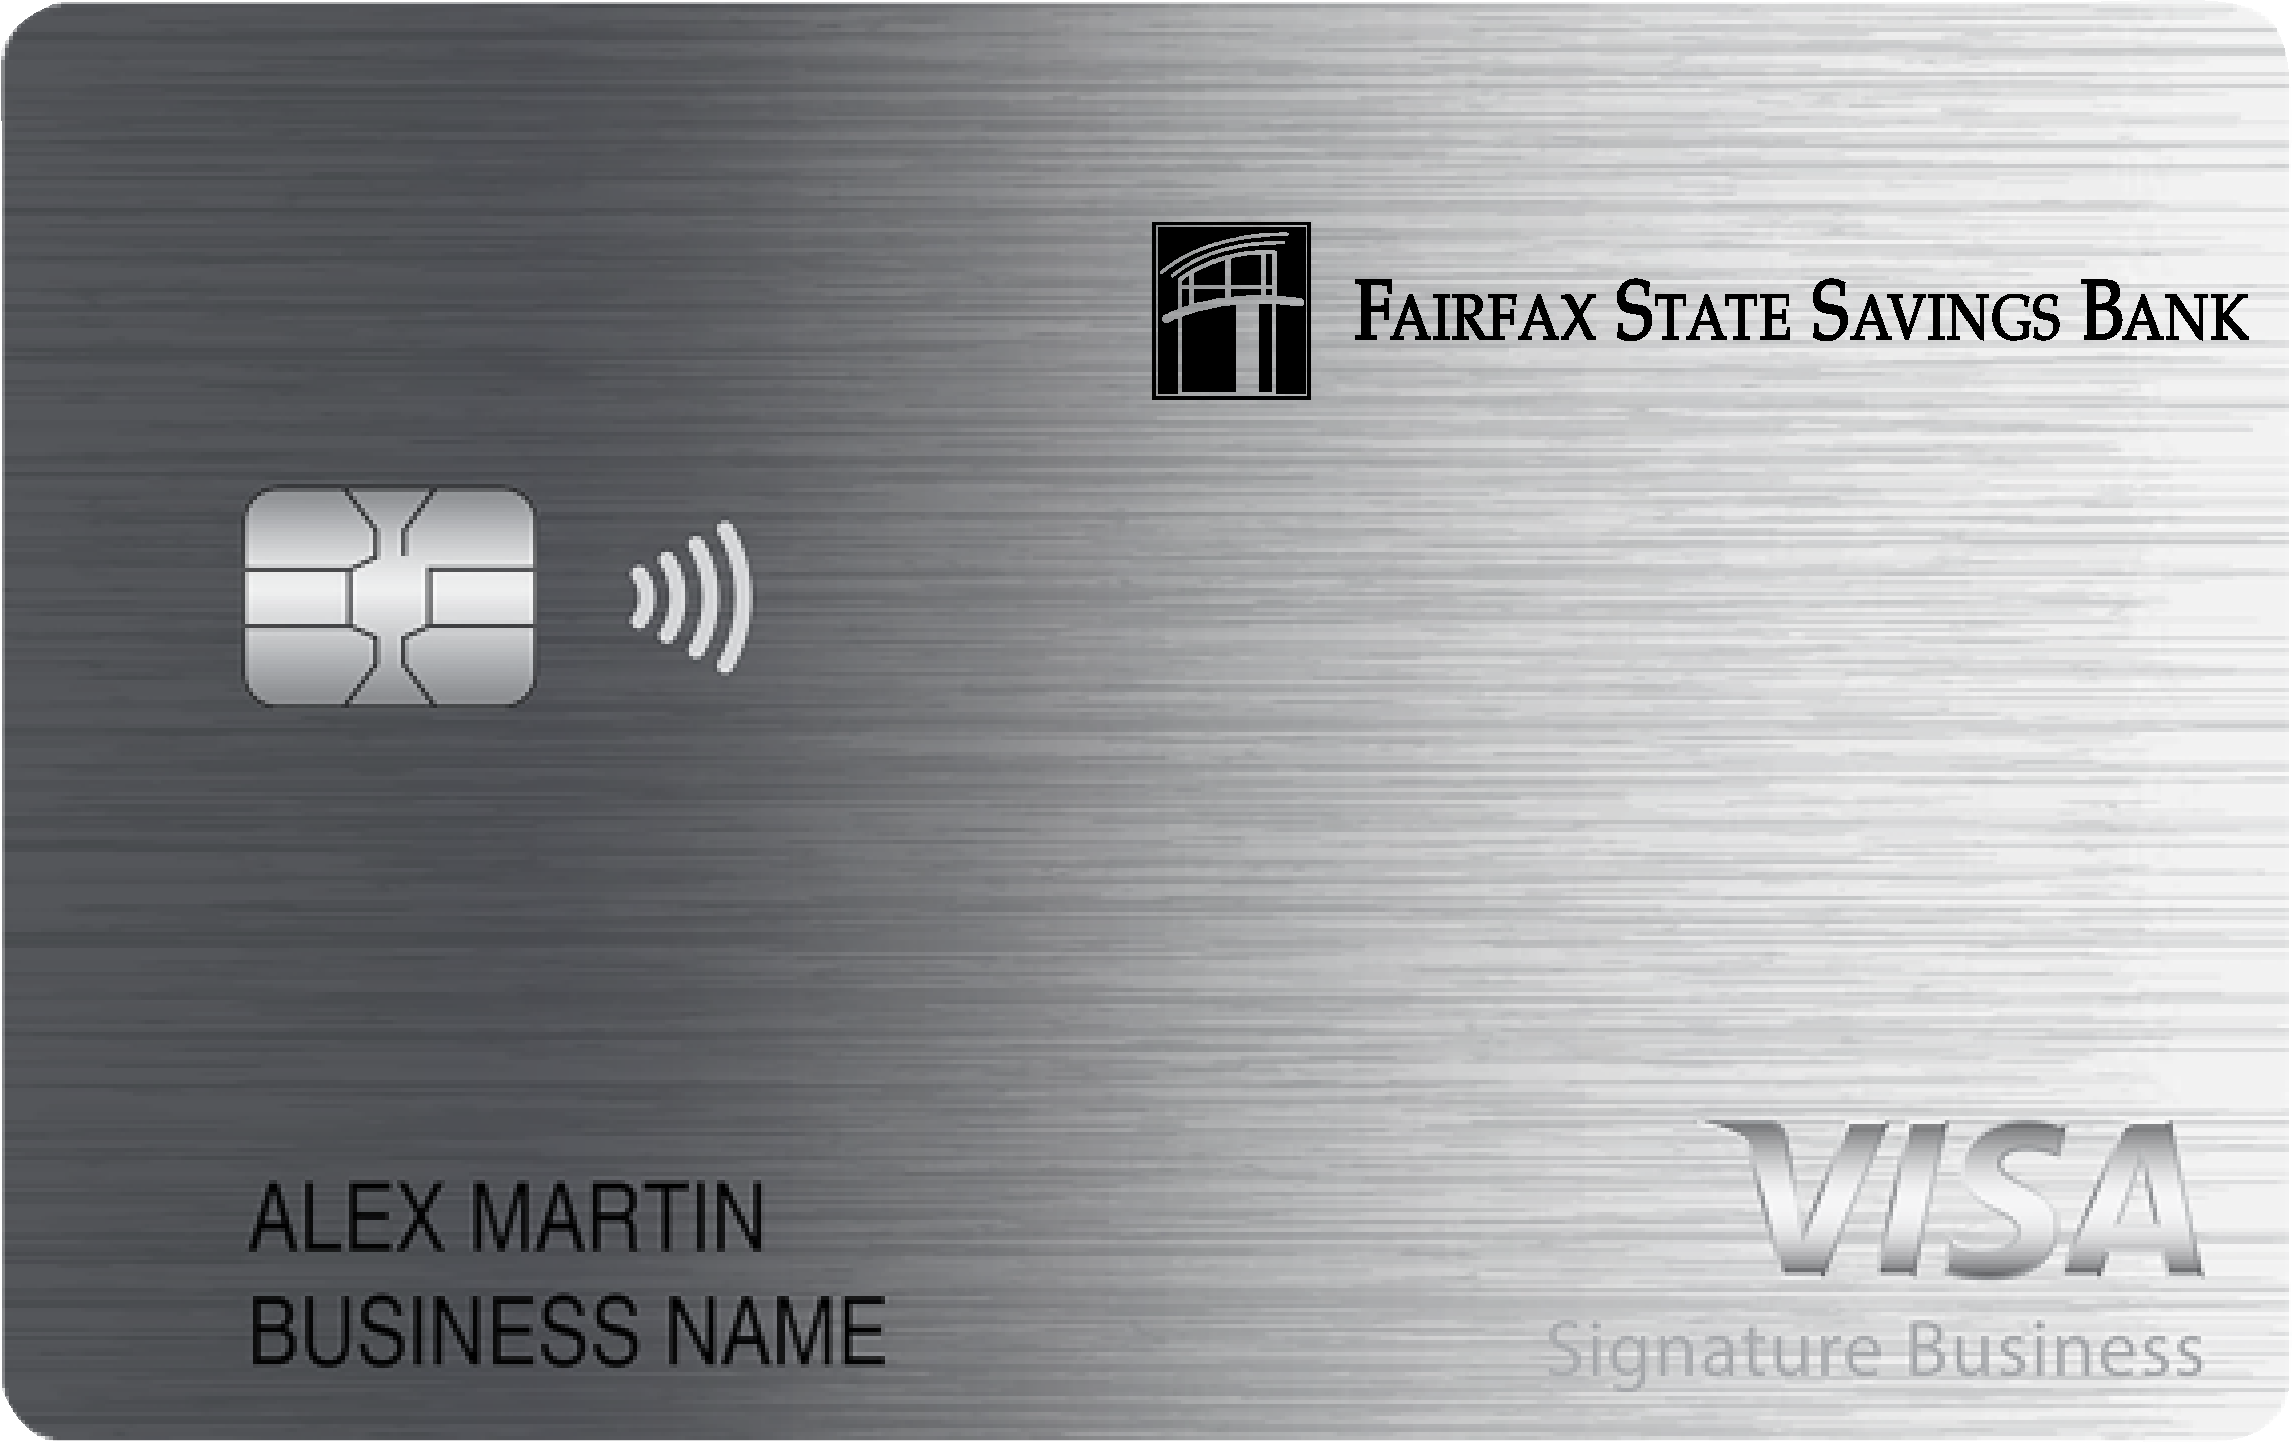 Fairfax State Savings Bank Smart Business Rewards Card